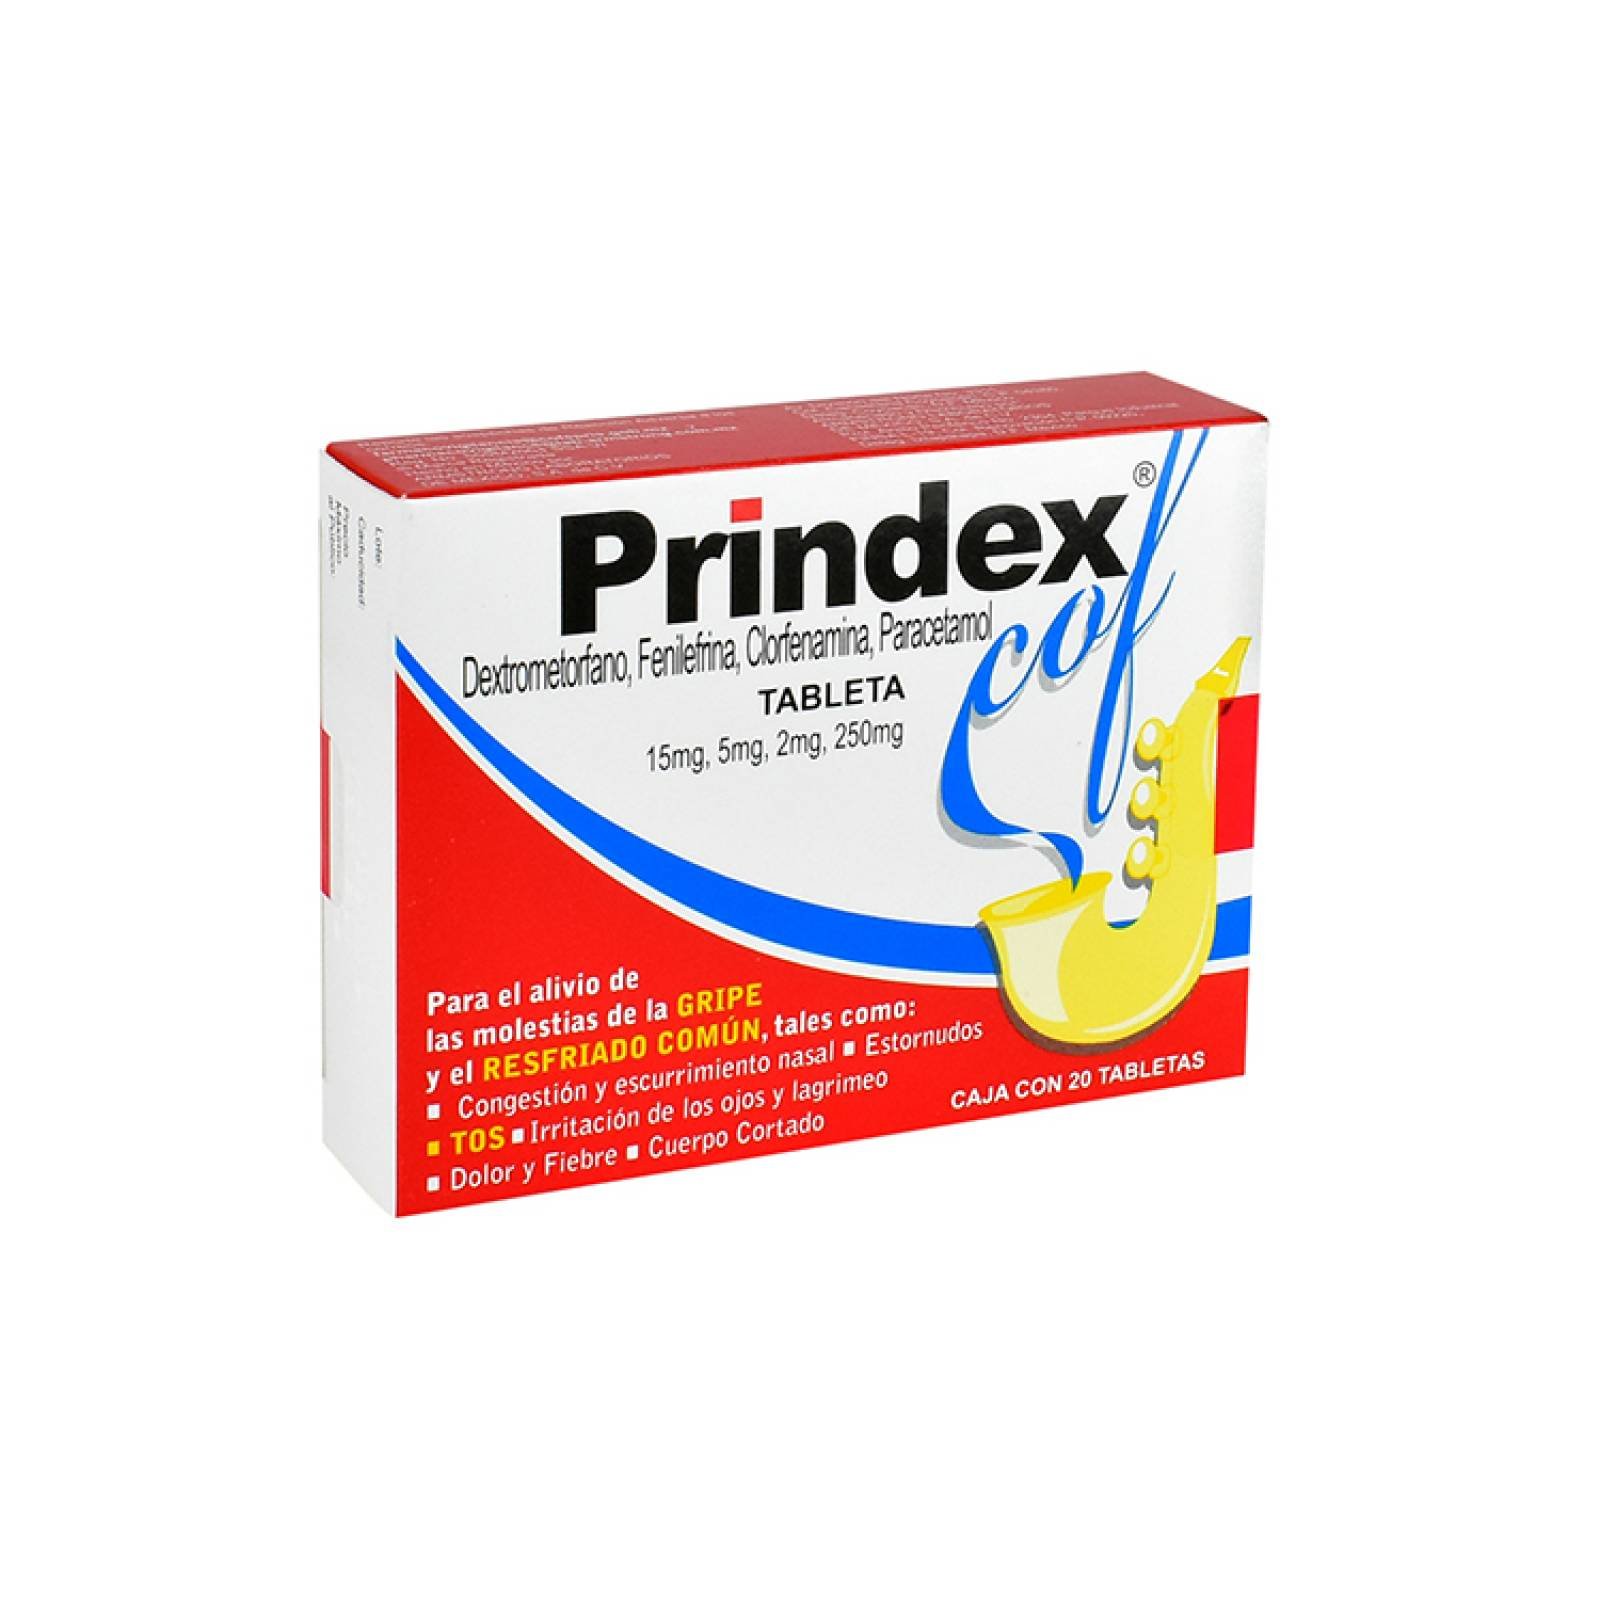 Prindex Cof 15/5/2/250 Mg Caja 20 Tabletas